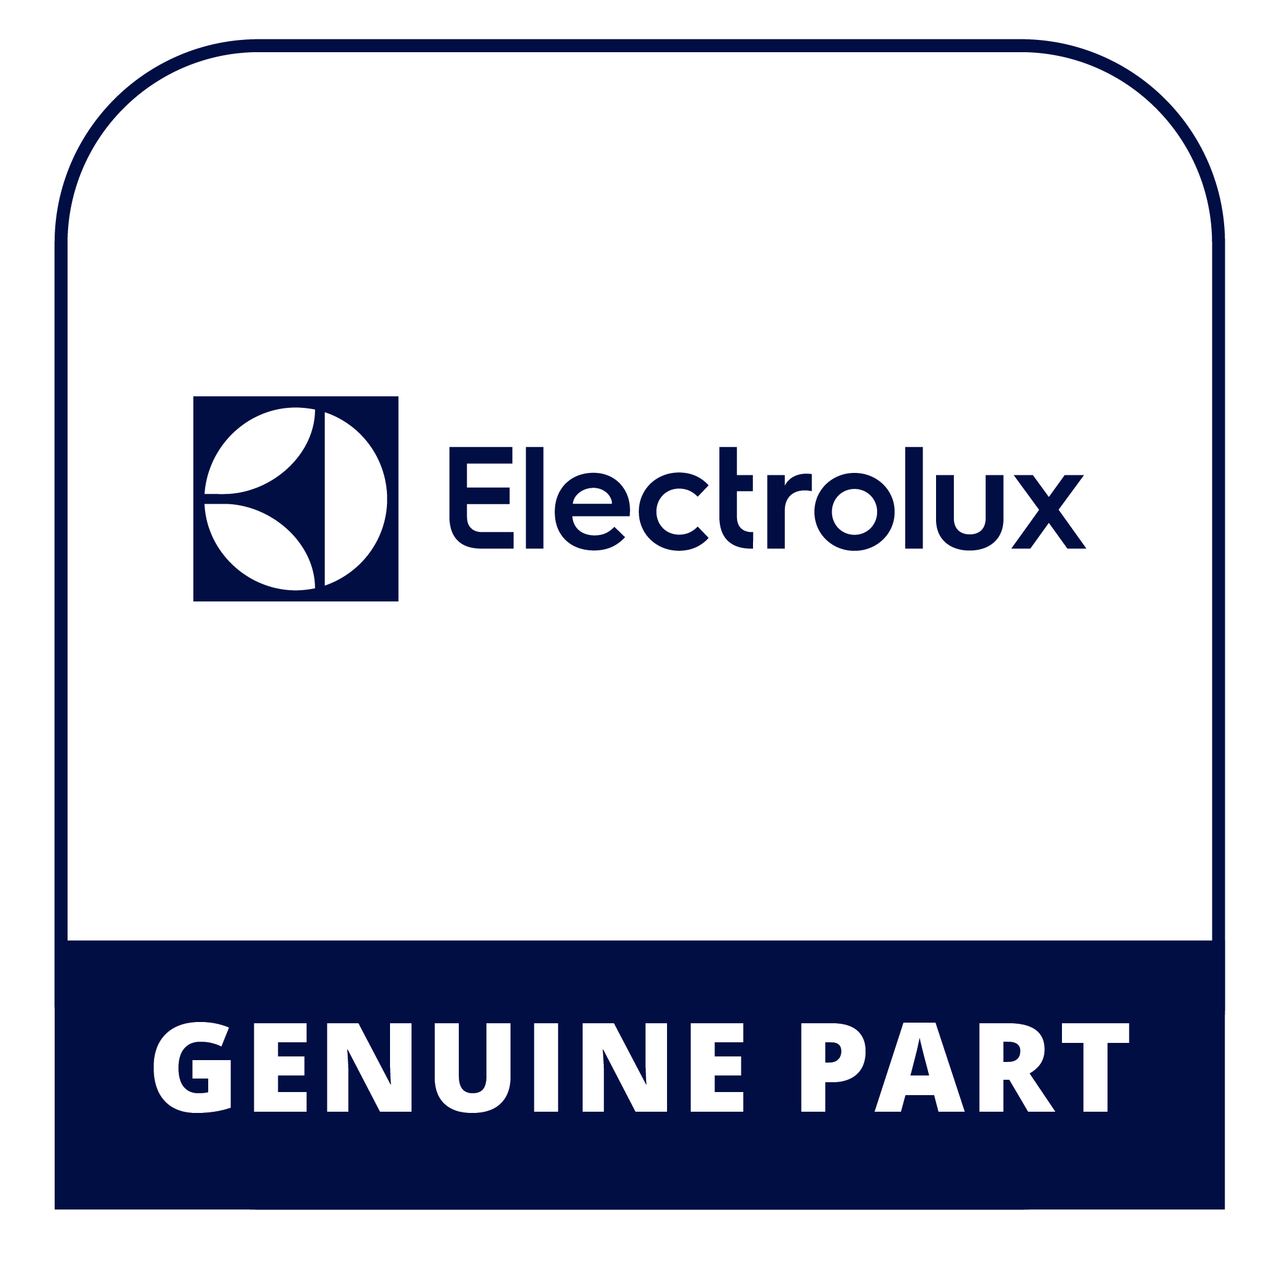 Frigidaire - Electrolux 240570239 Label-Module Cover - Genuine Electrolux Part